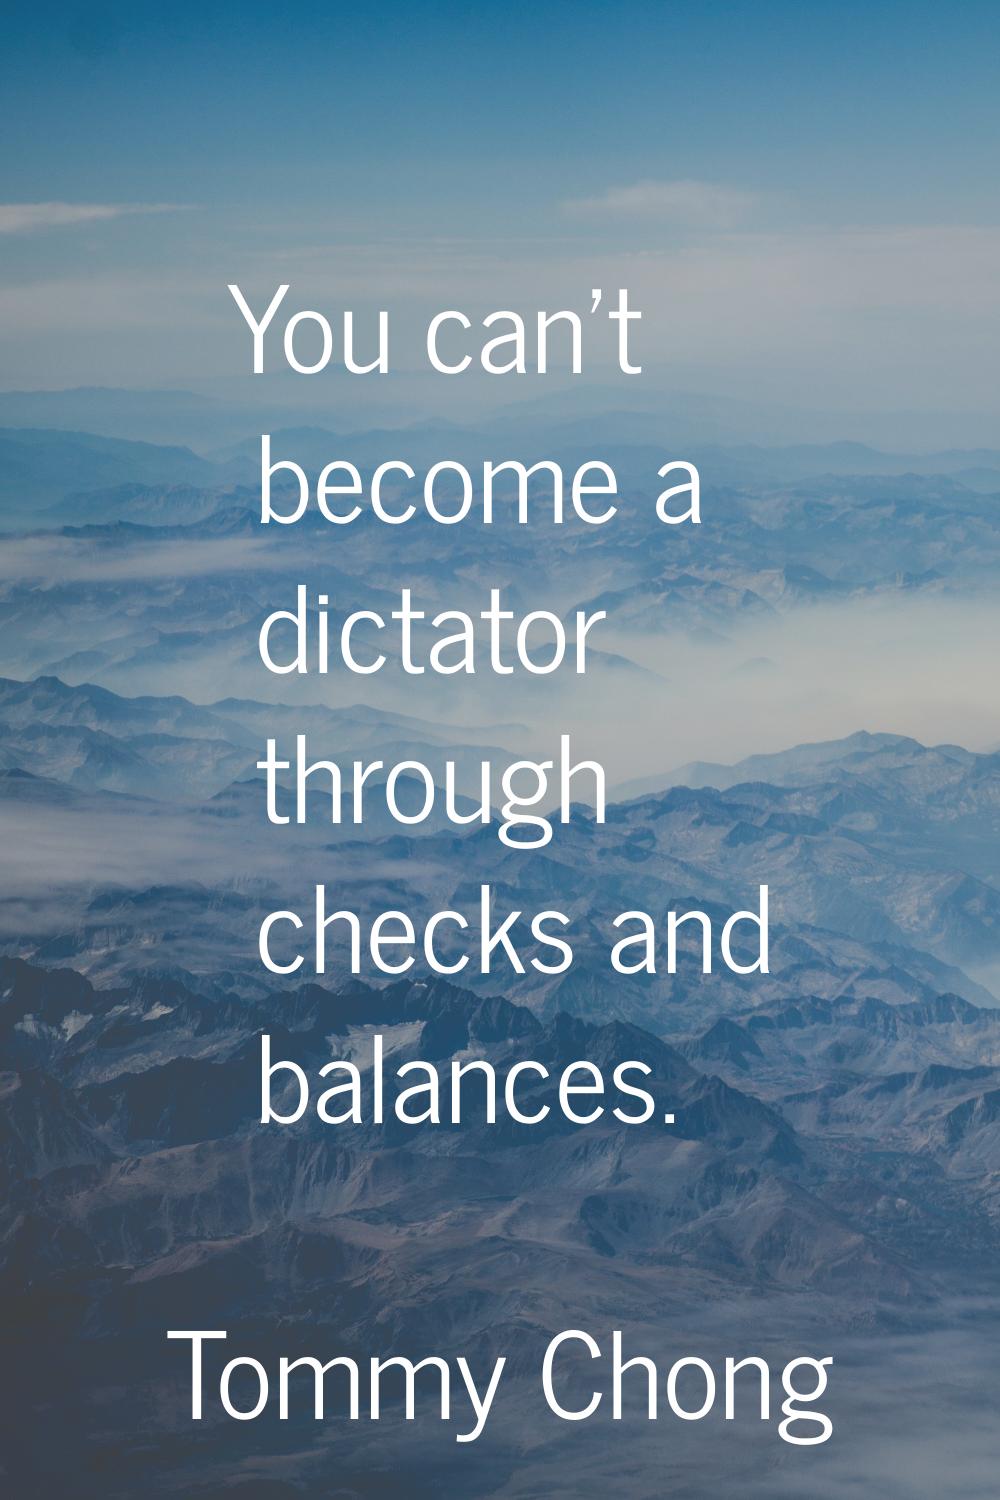 You can't become a dictator through checks and balances.